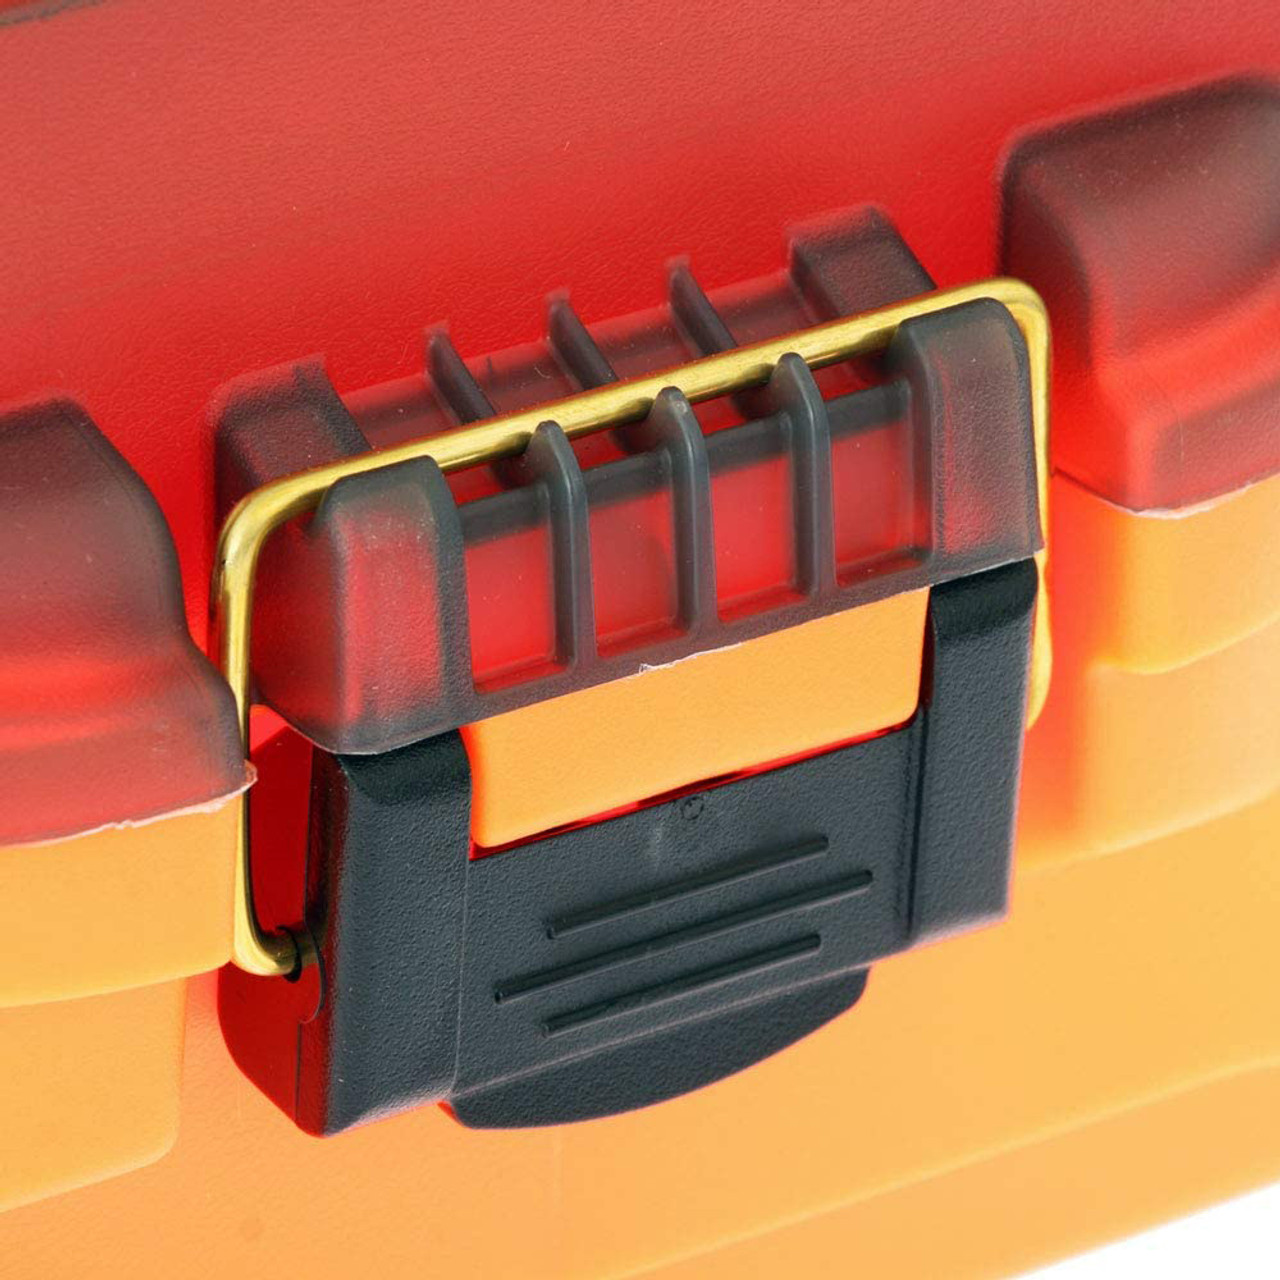 Plano 2-Tray Tackle Box w\/Dual Top Access - Smoke  Bright Orange [PLAMT6221]